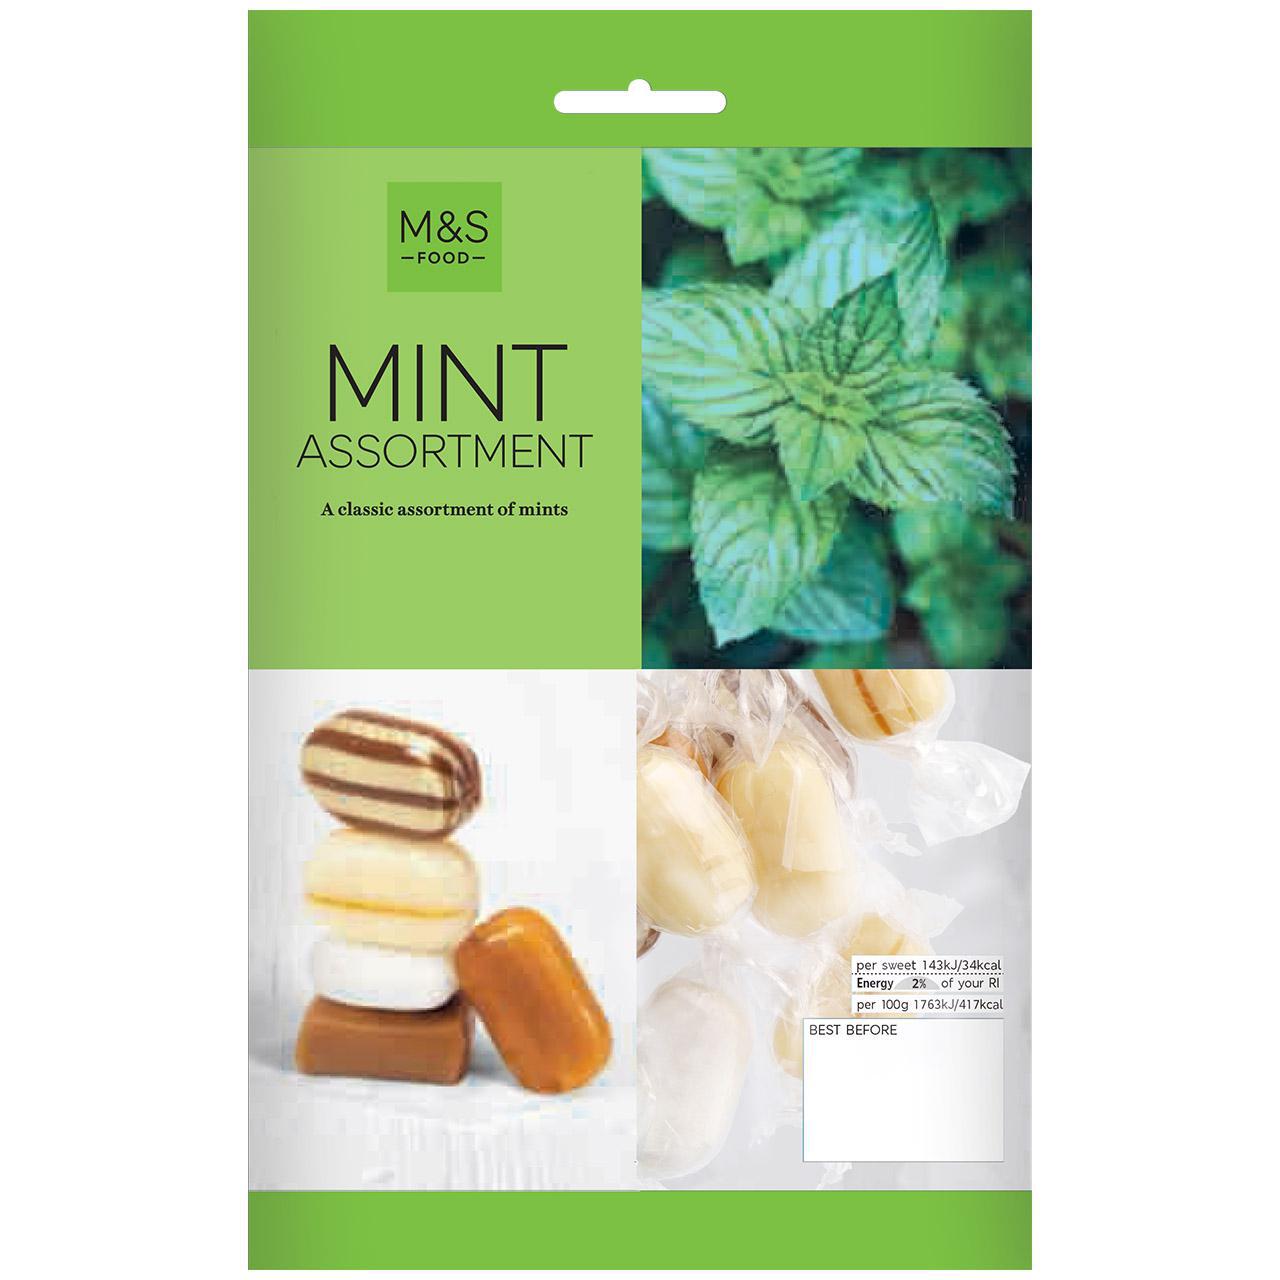 M&S Mint Assortments 225g